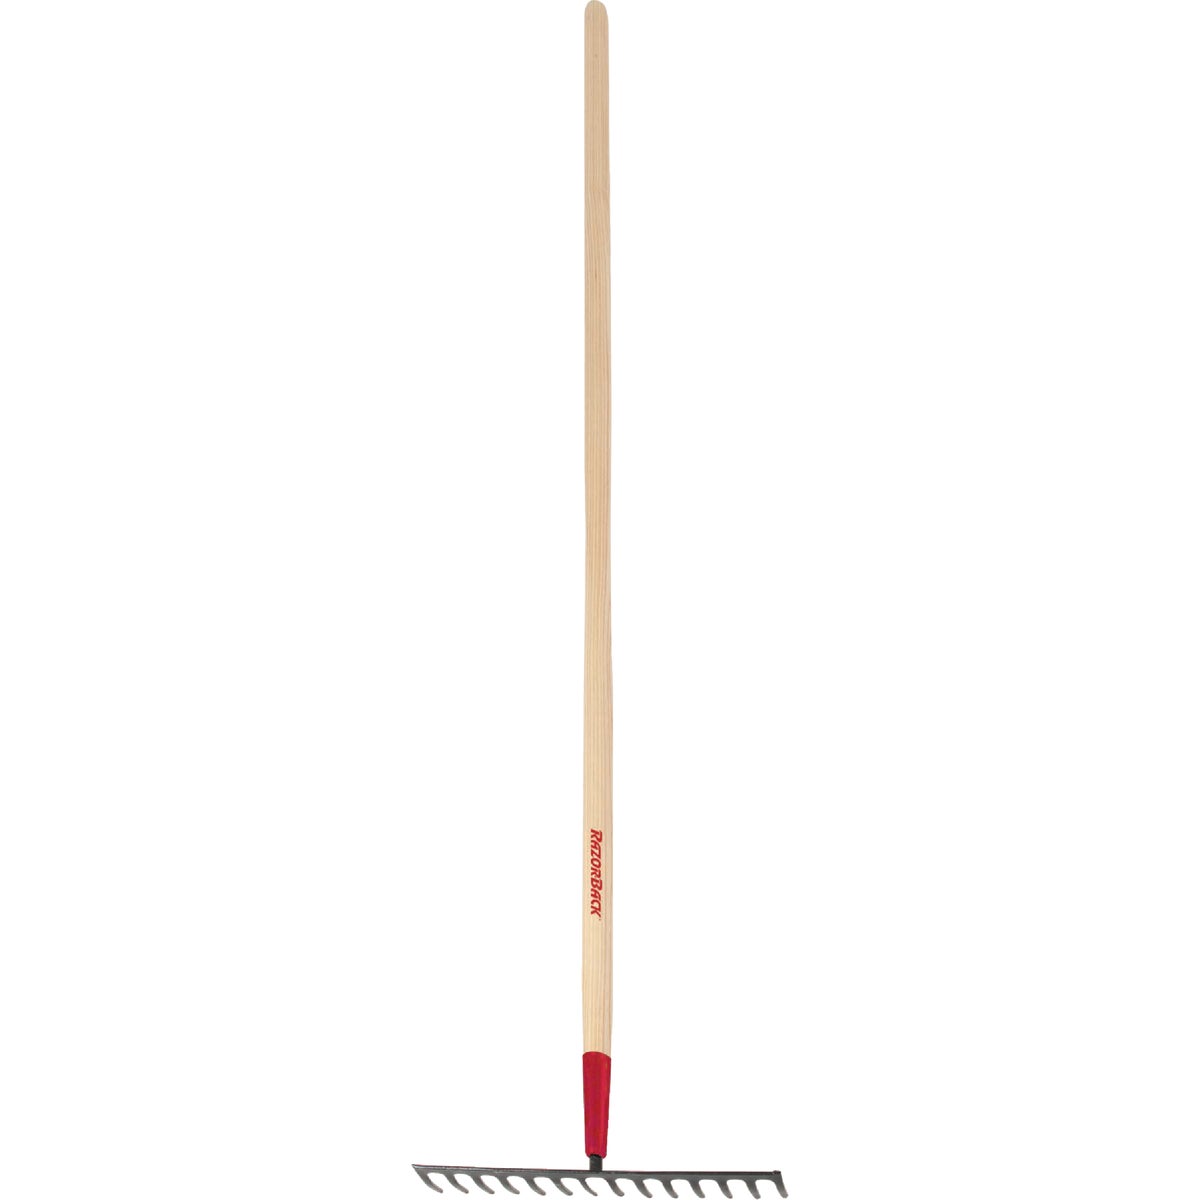 Item 701921, Razor-Back rake is designed to loosen and level soil.